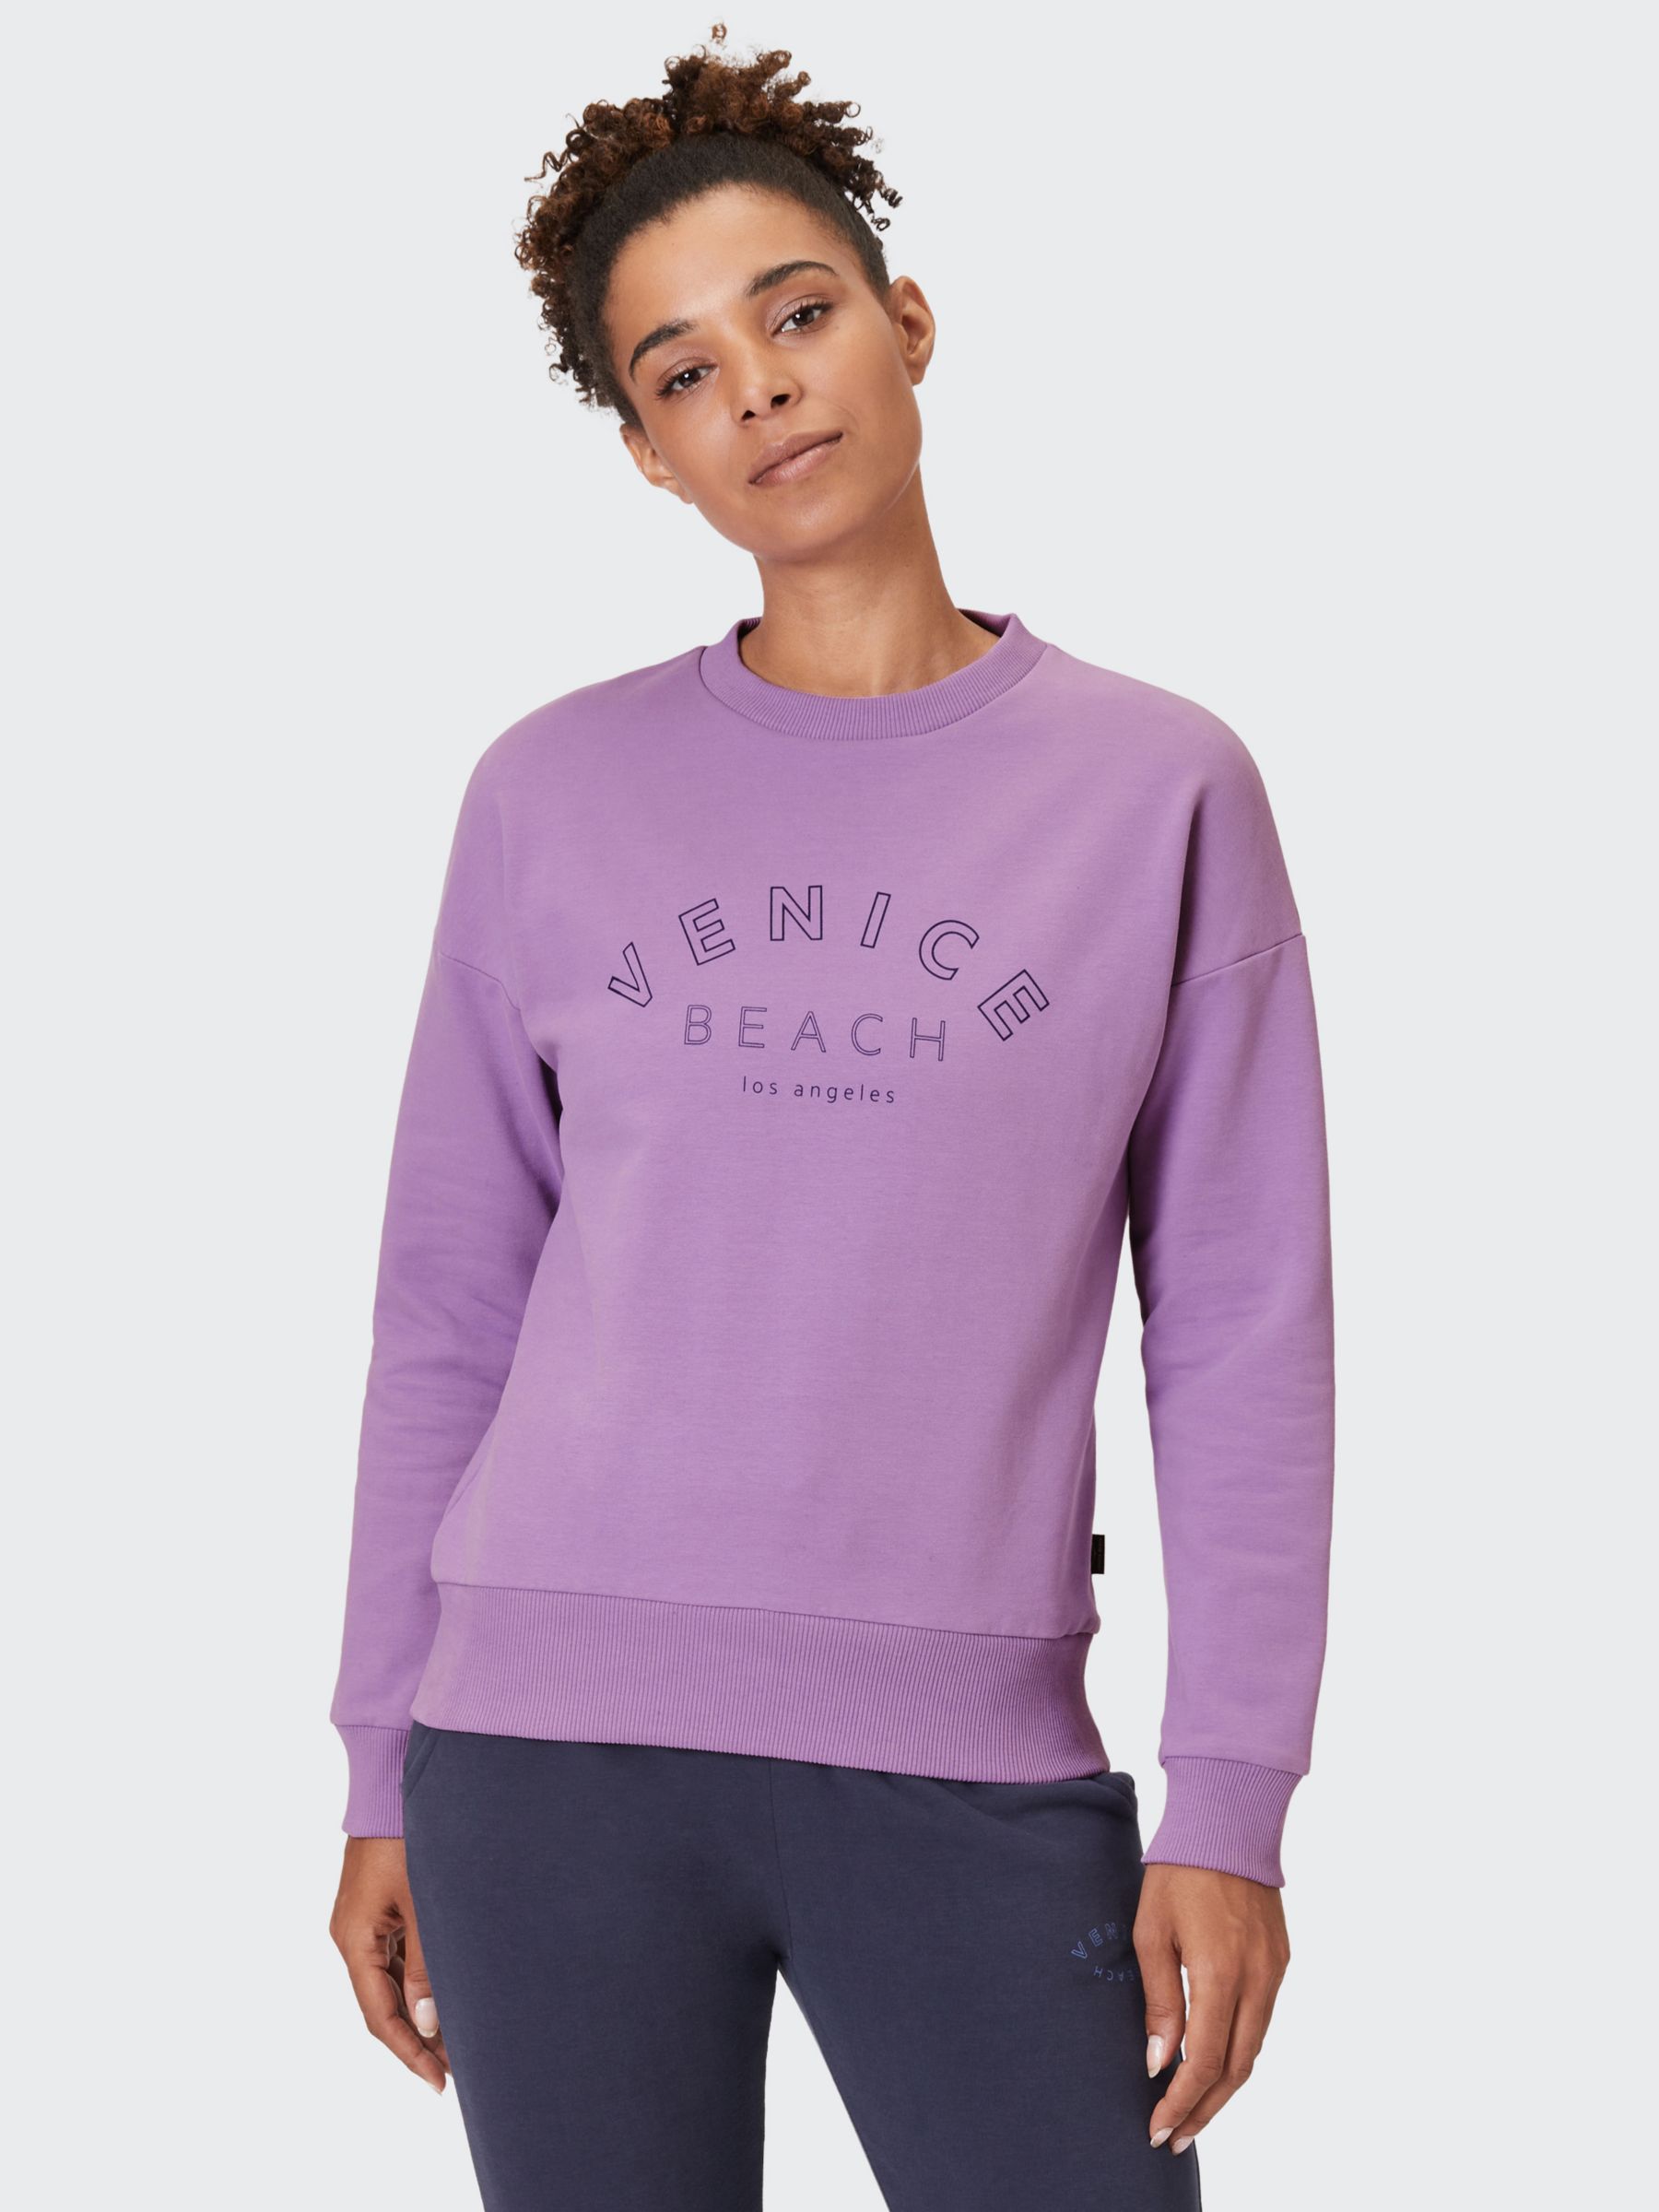 Venice Beach Lissa Sweatshirt, Soft Mulberry, S